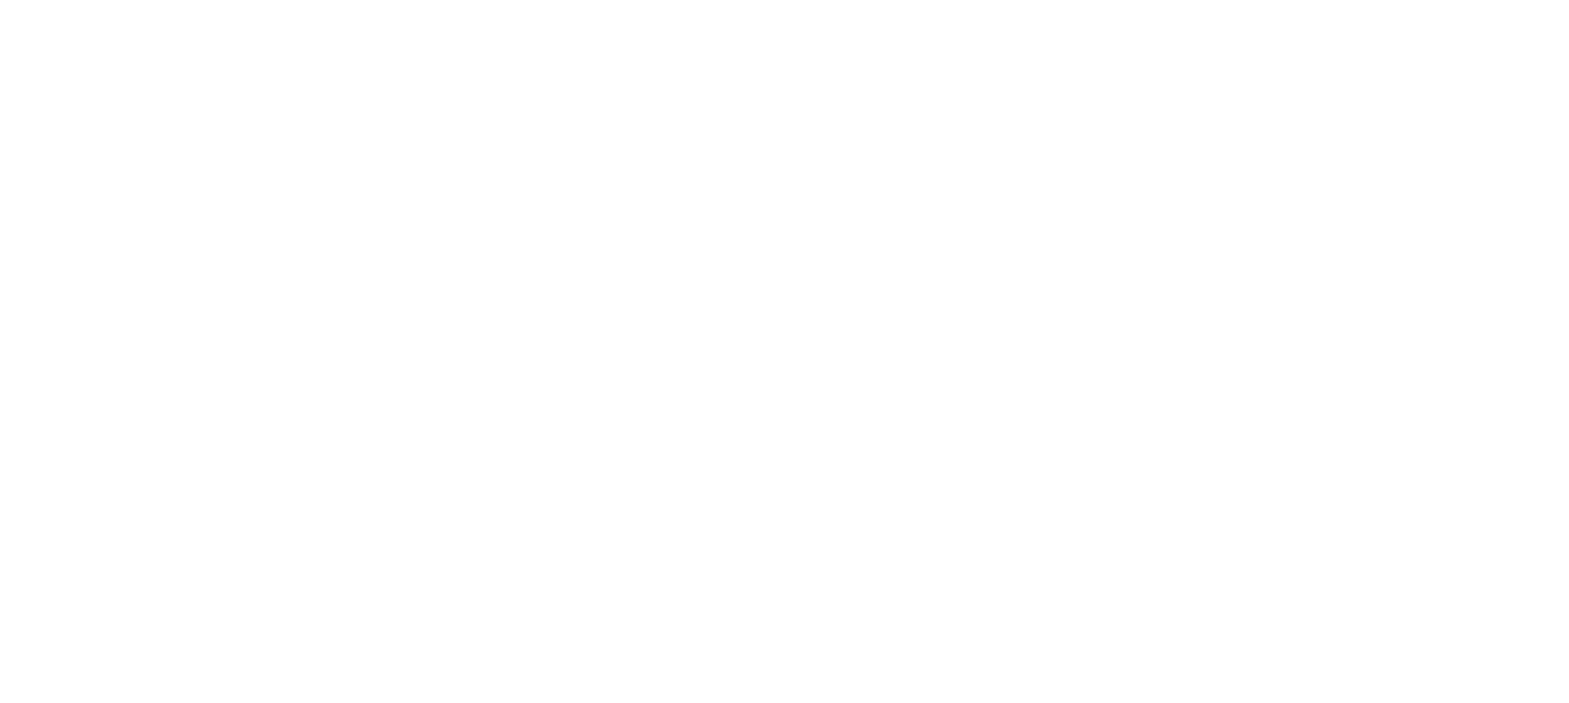 ADNOC Drilling Company logo large for dark backgrounds (transparent PNG)